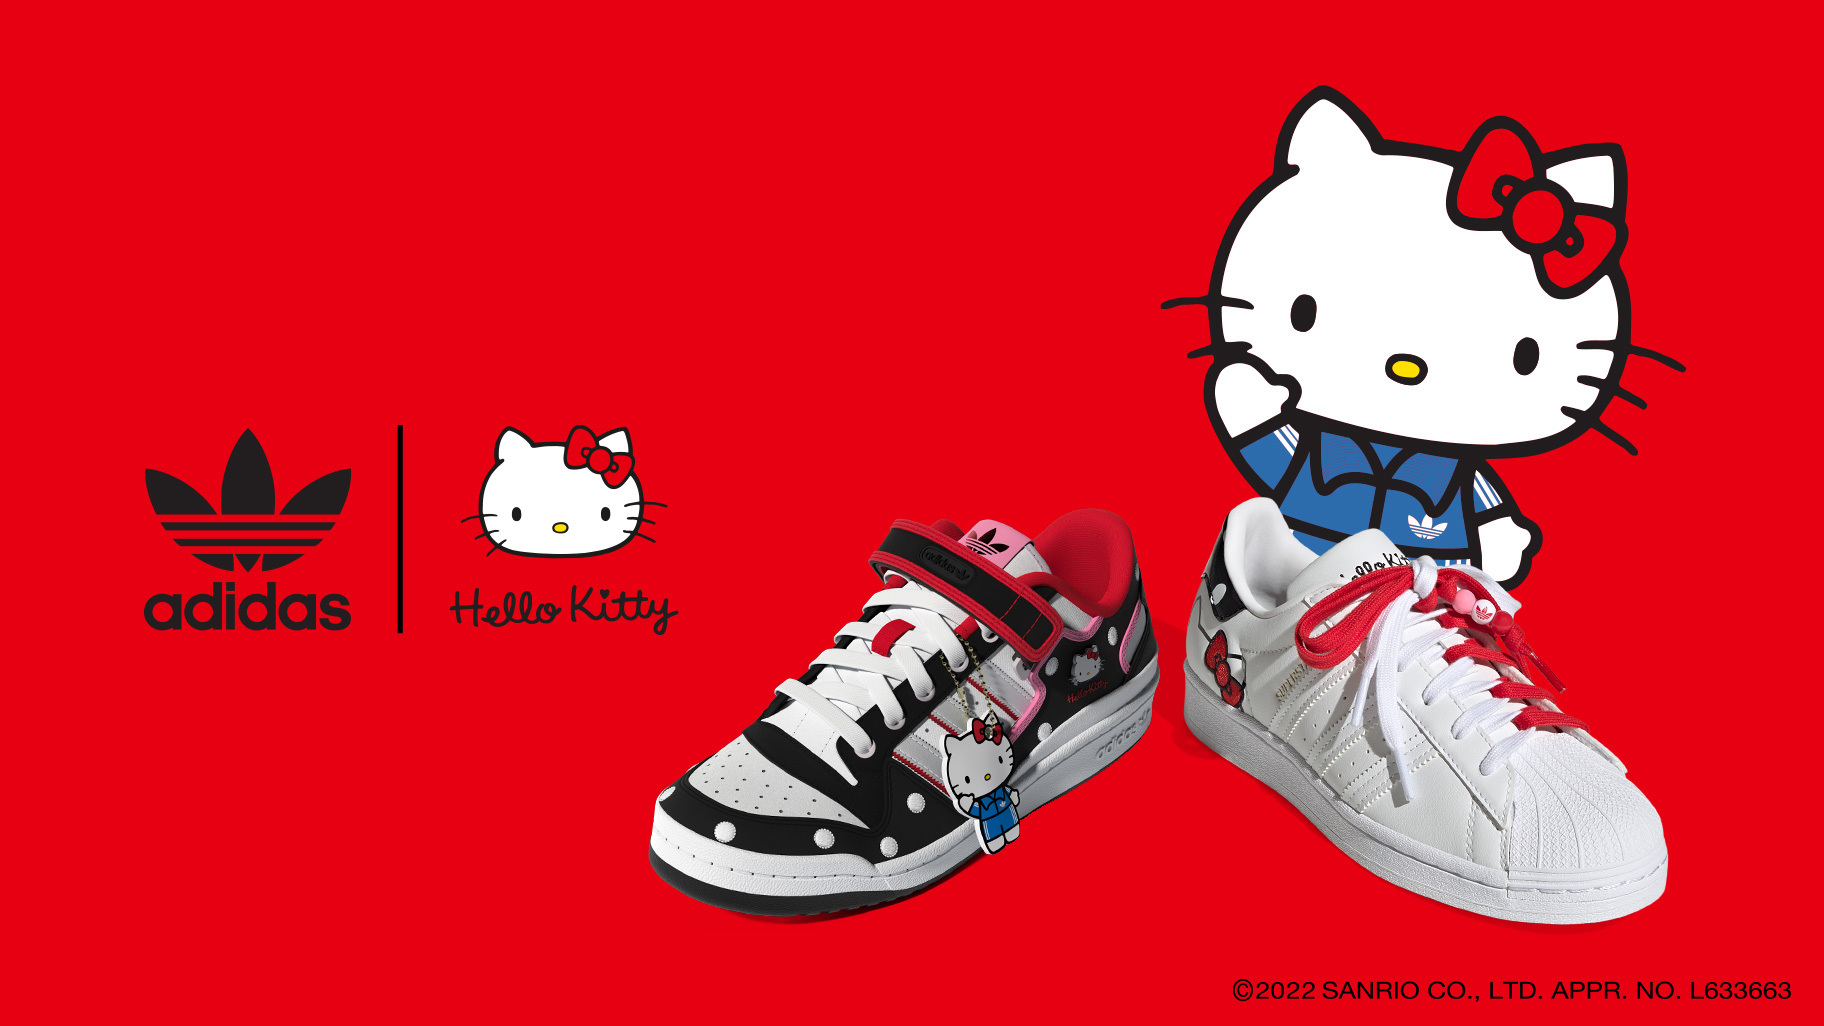 Adidas x Hello Kitty